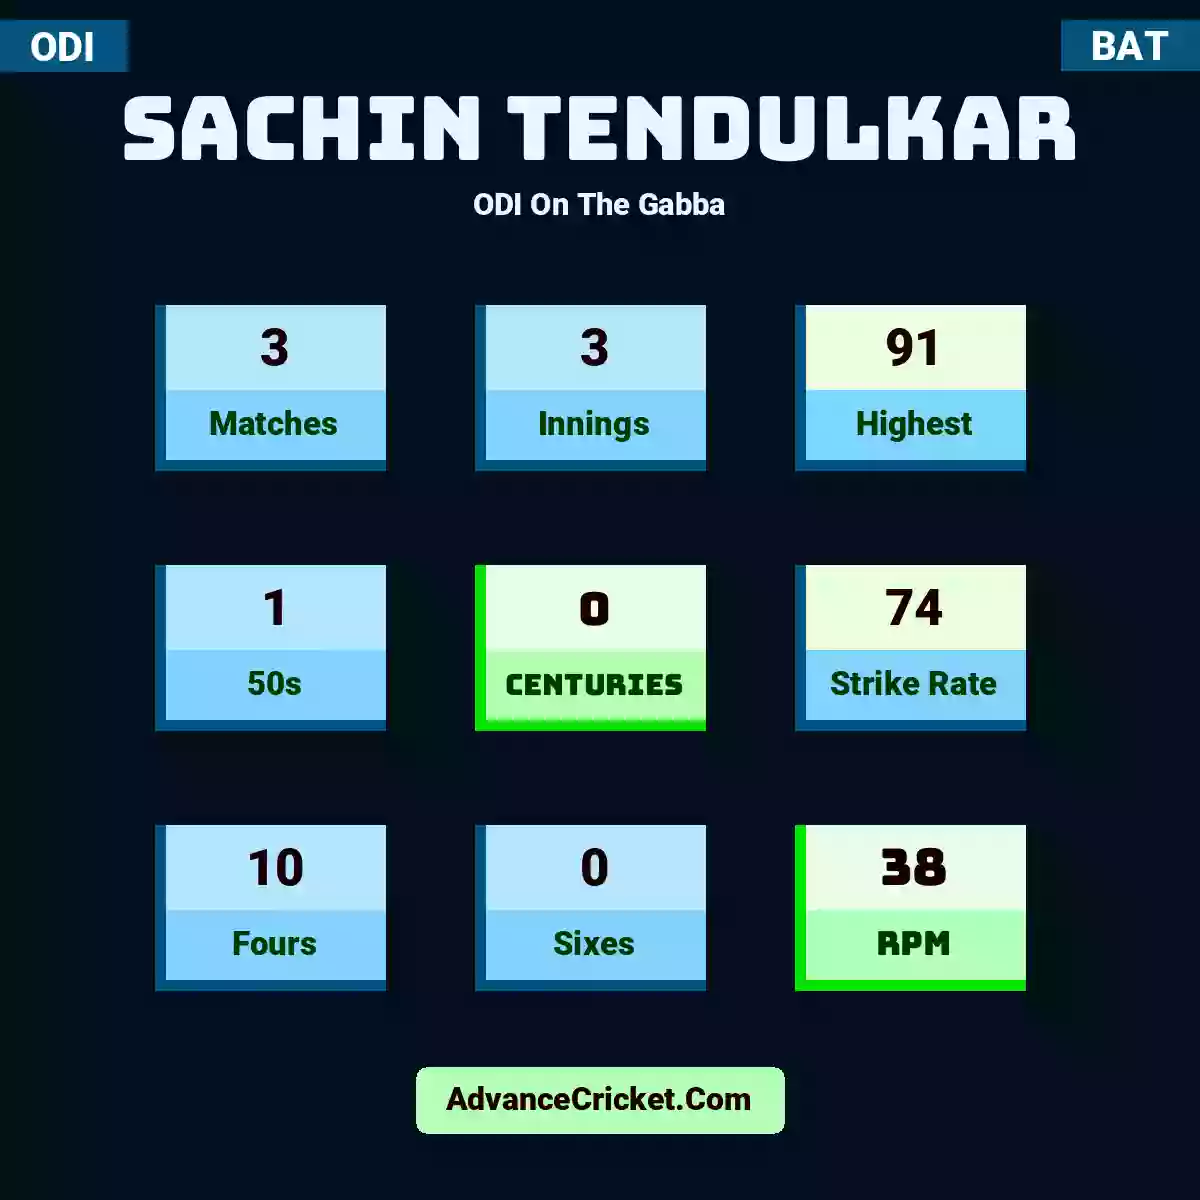 Sachin Tendulkar ODI  On The Gabba, Sachin Tendulkar played 3 matches, scored 91 runs as highest, 1 half-centuries, and 0 centuries, with a strike rate of 74. S.Tendulkar hit 10 fours and 0 sixes, with an RPM of 38.